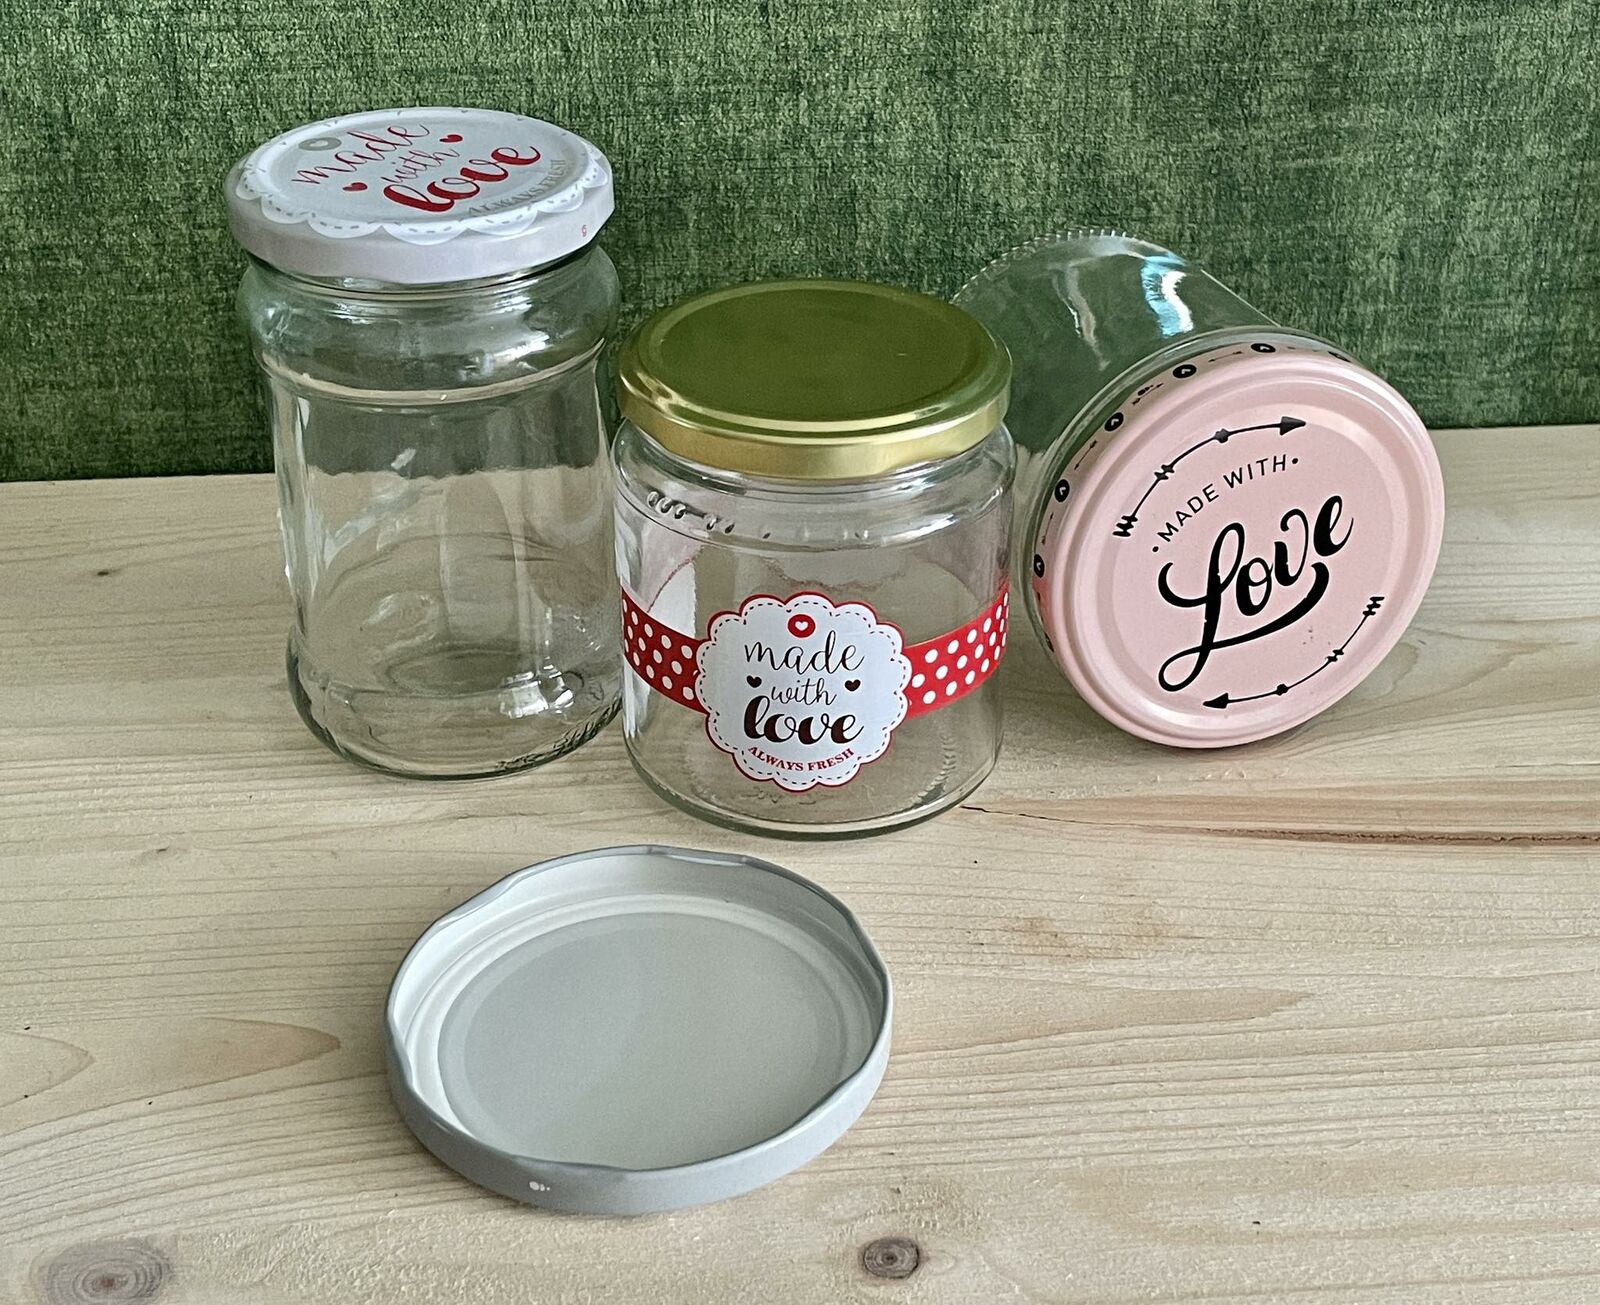 Twist-off jars for preserving